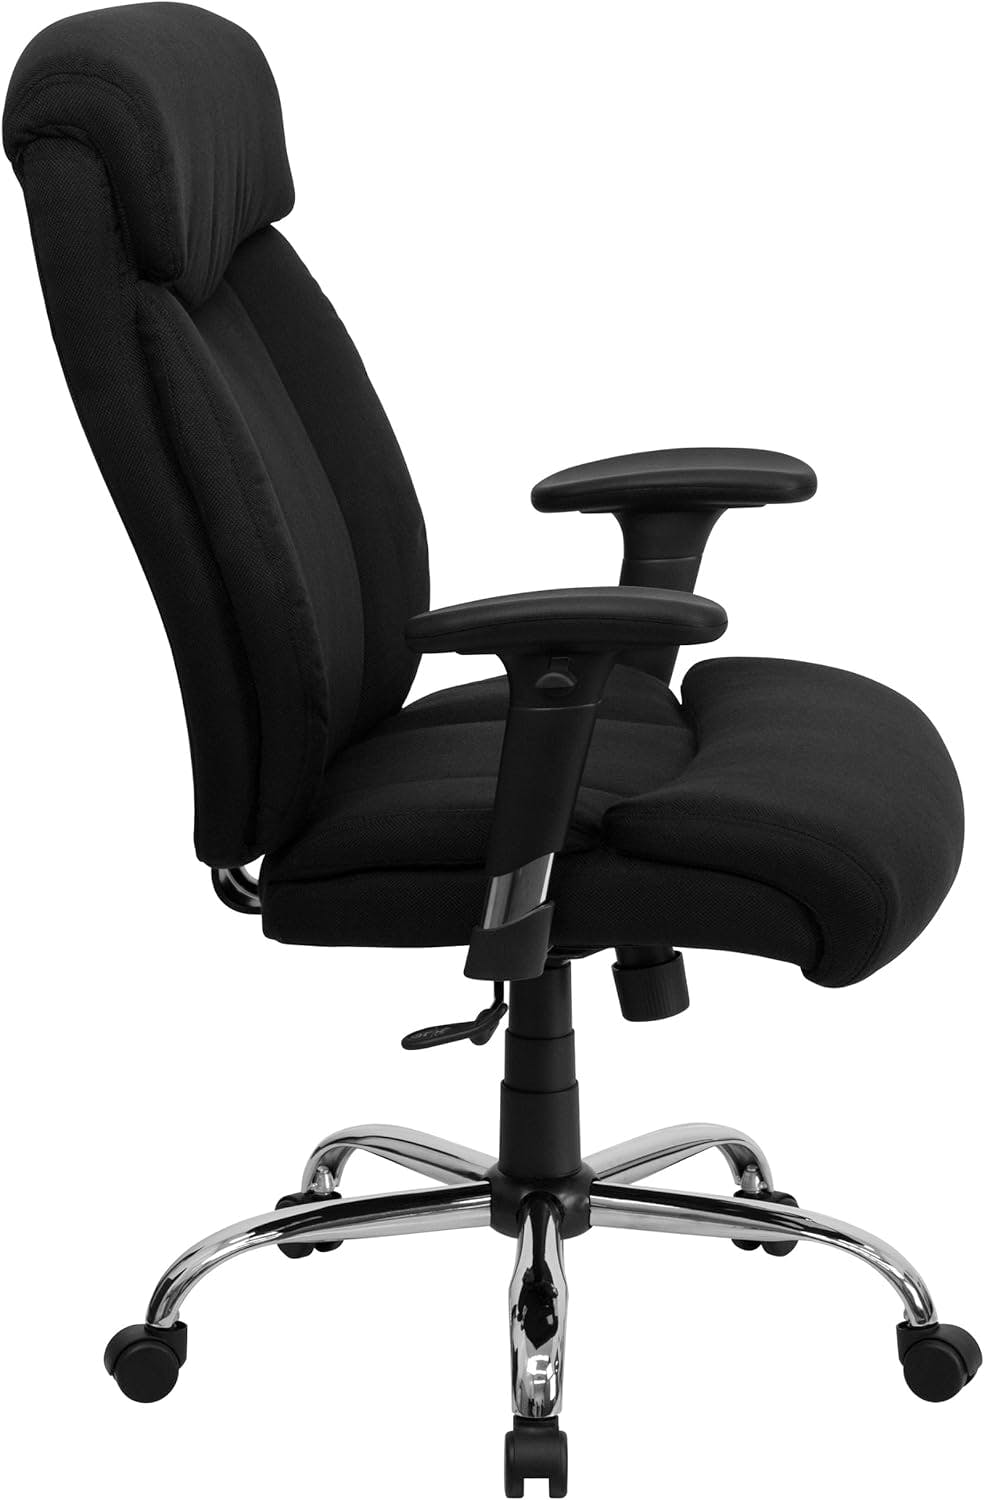 Ergonomic High-Back Executive Swivel Chair in Black with Chrome Base